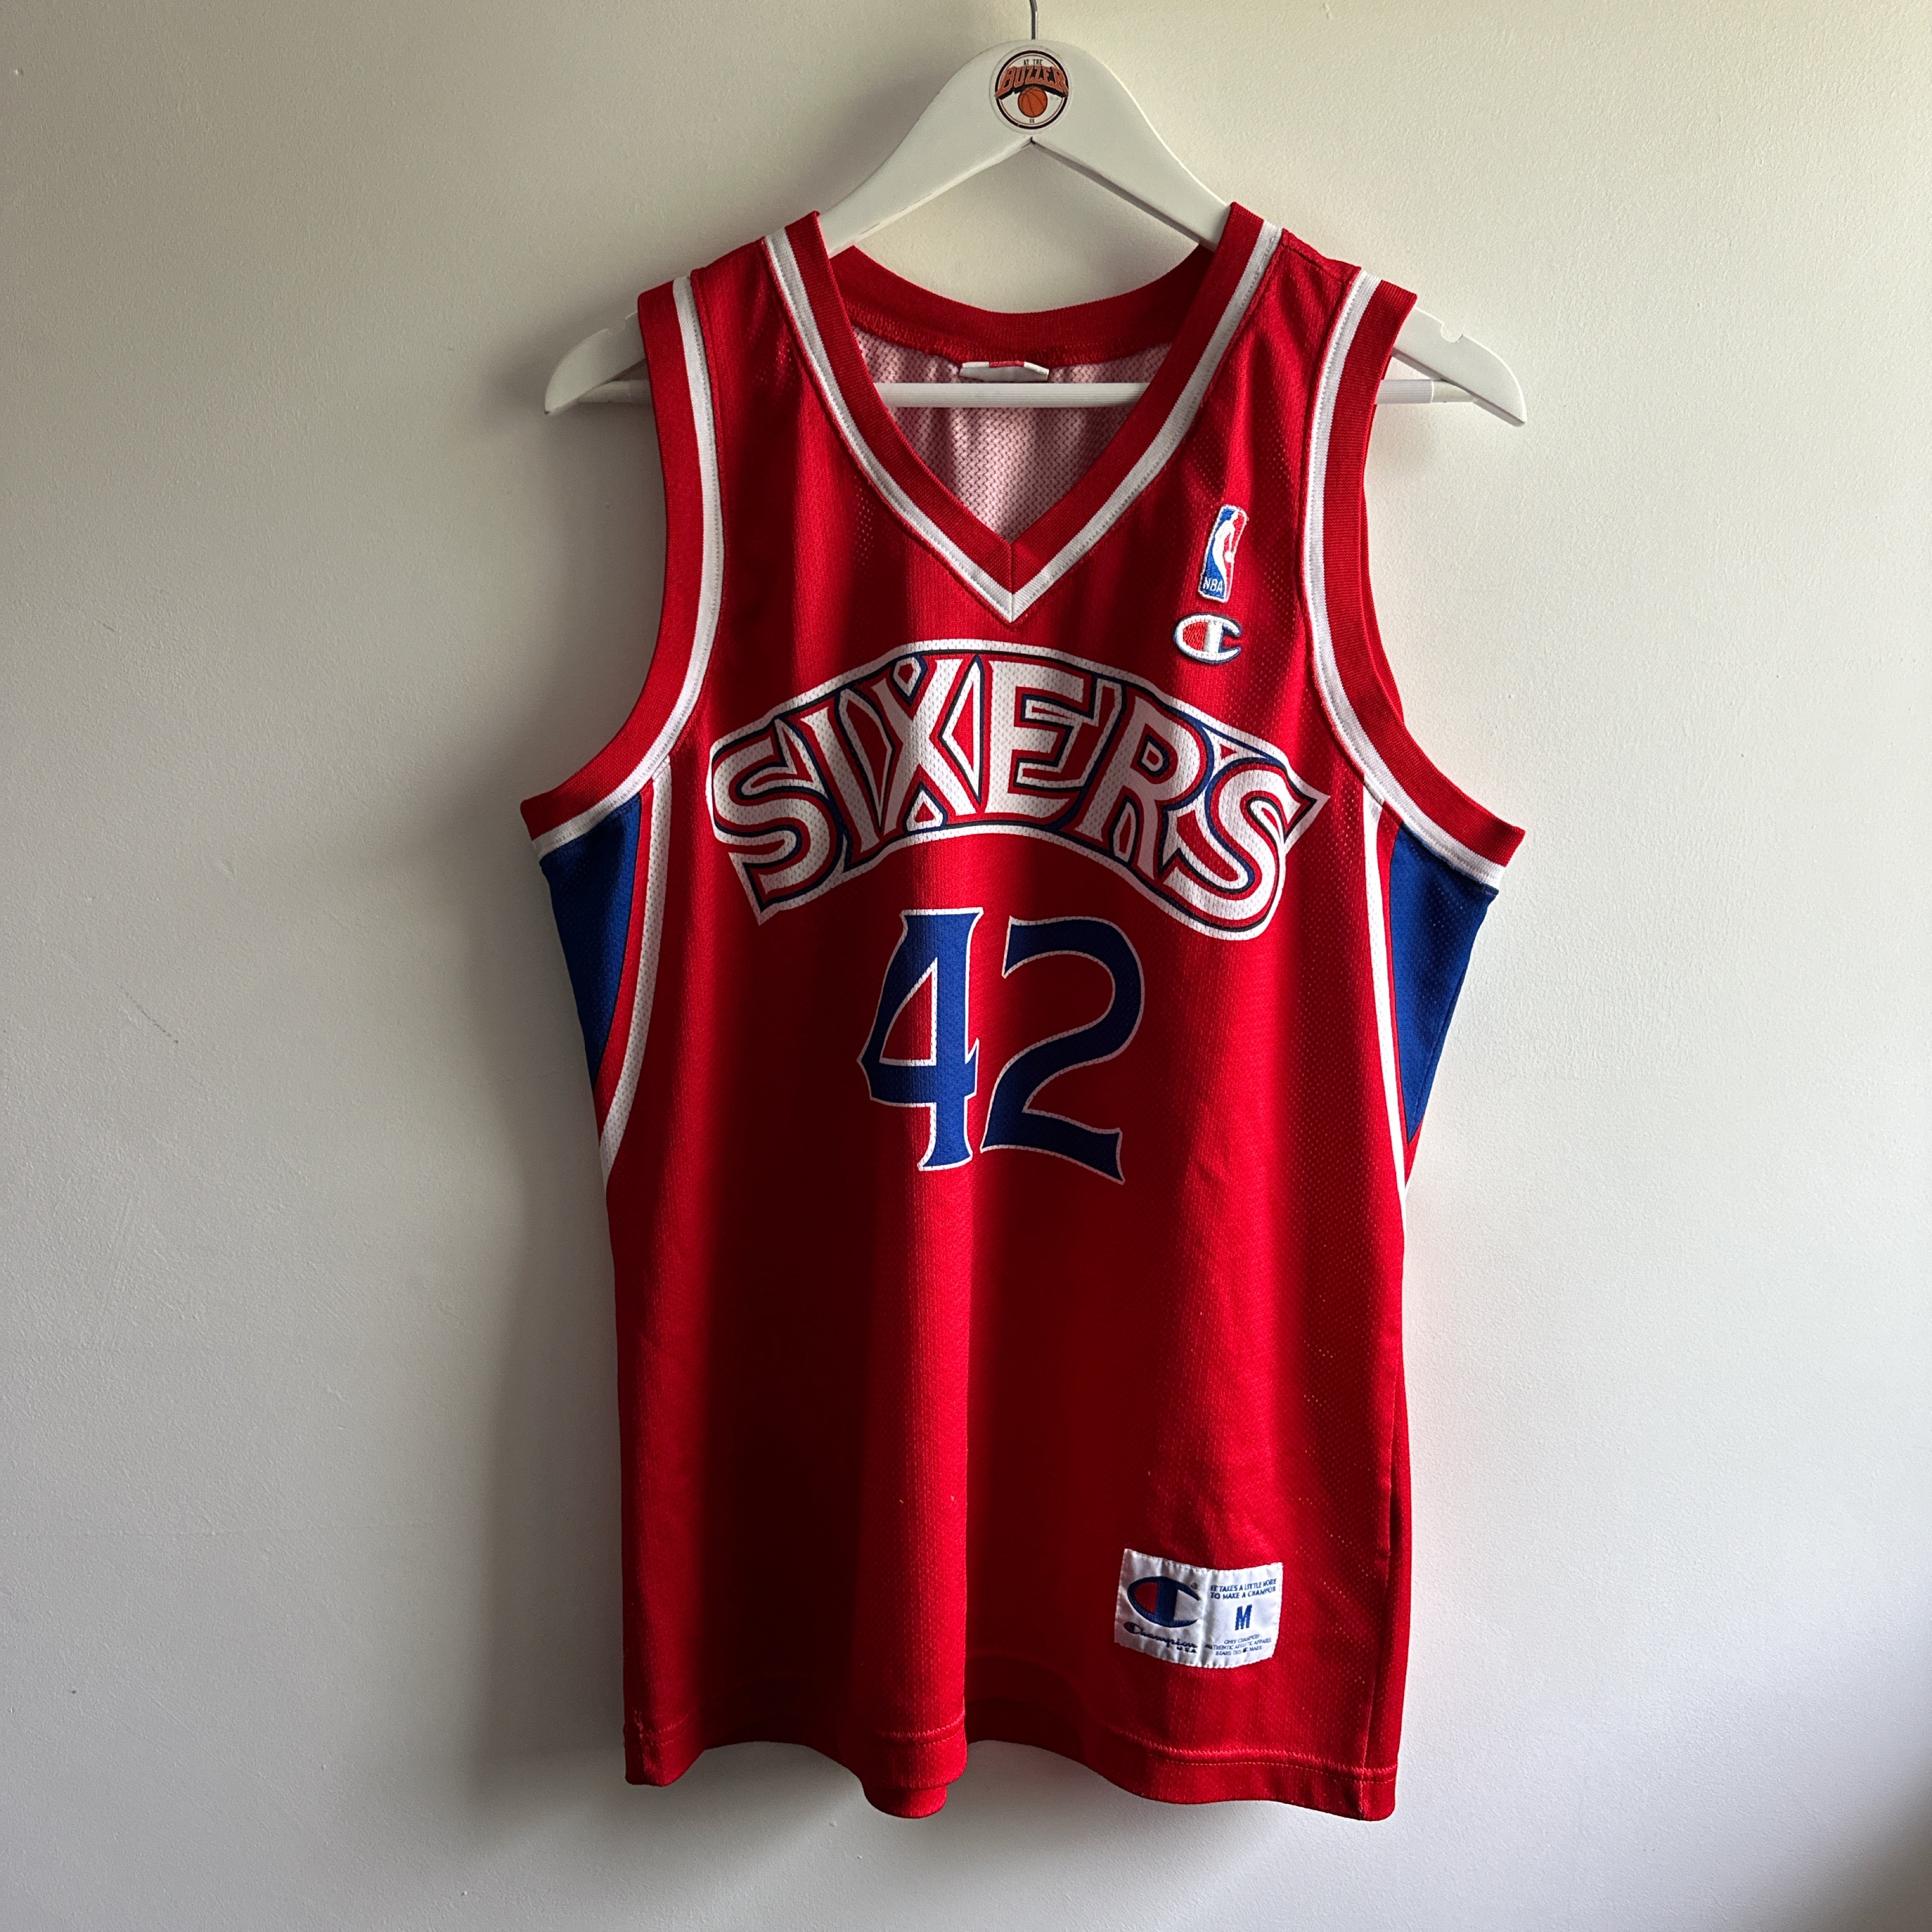 Philadelphia 76ers Jerry Stackhouse Champion jersey - Medium